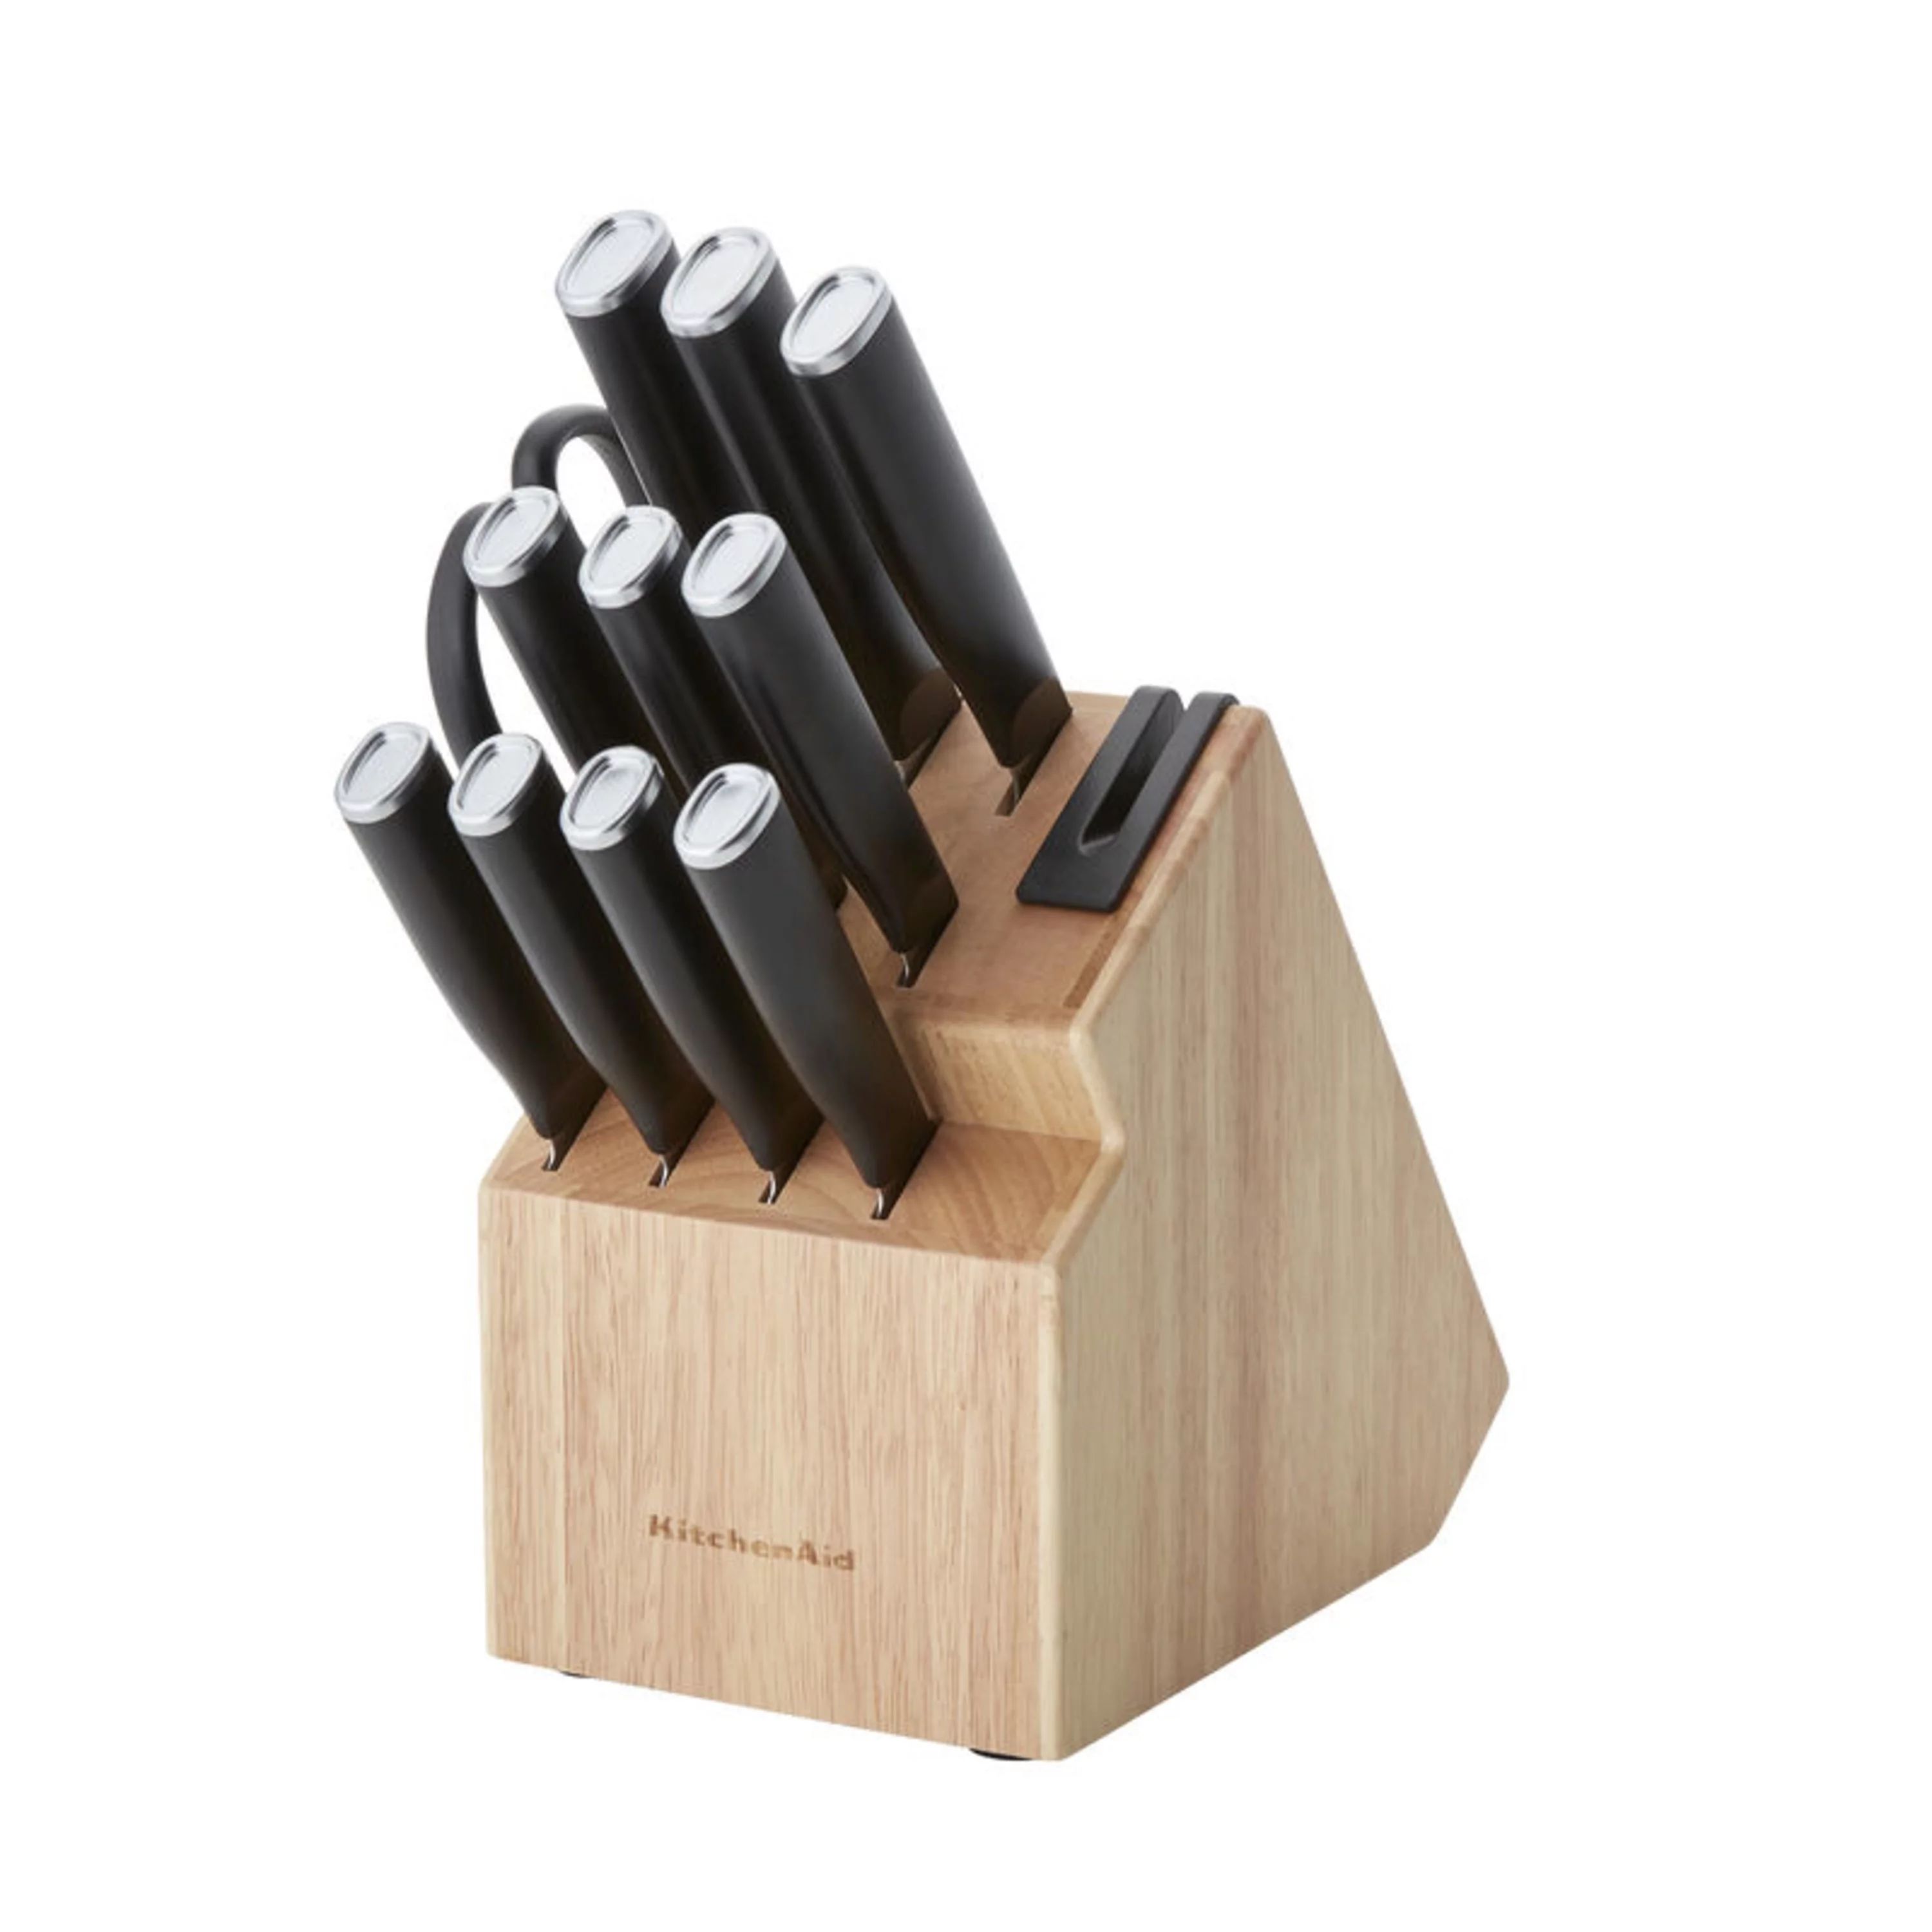 KitchenAid Classic Japanese Steel 12-Piece Knife Block Set with Built-in Knife Sharpener, Black | Walmart (US)